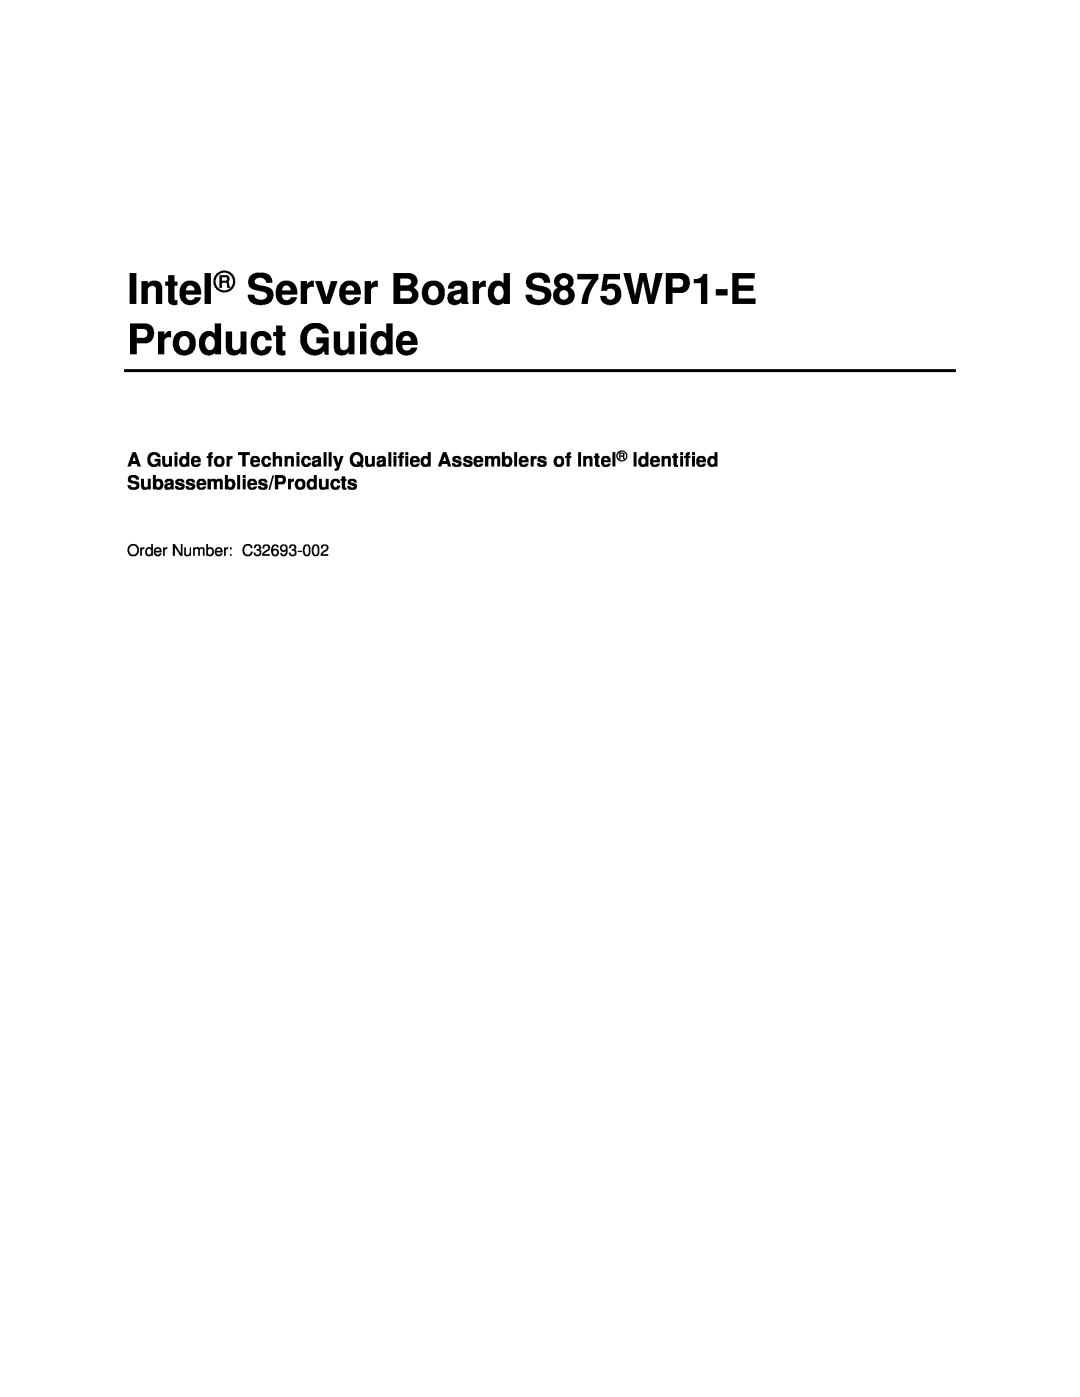 Intel manual Intel Server Board S875WP1-E Product Guide, Subassemblies/Products 